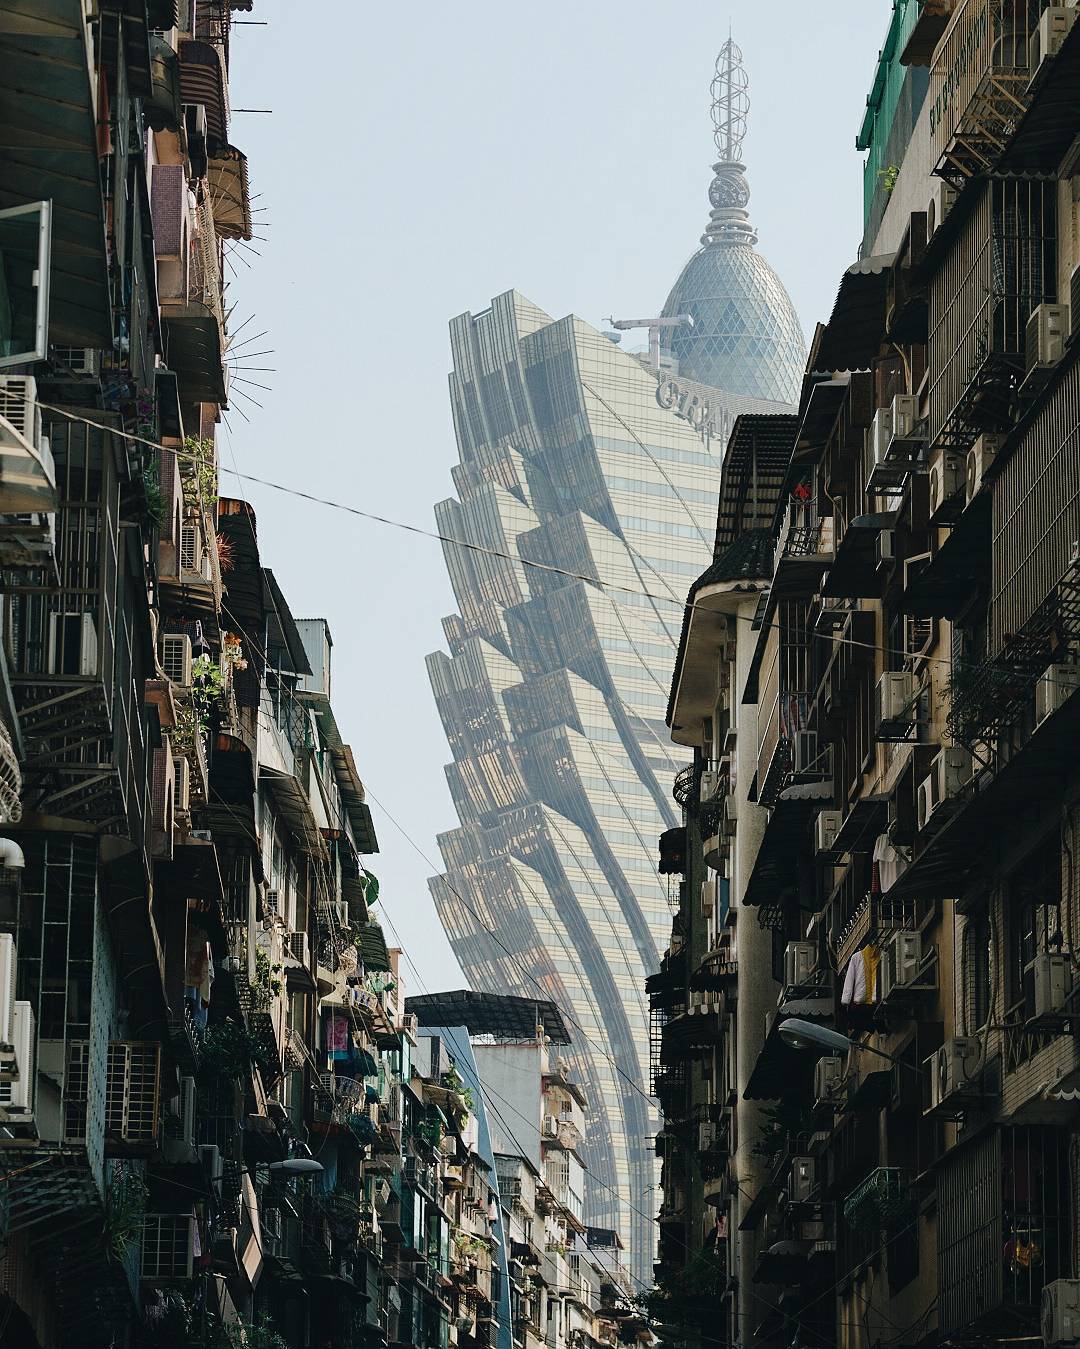 Grand Lisboa street view Macau Lifestyle